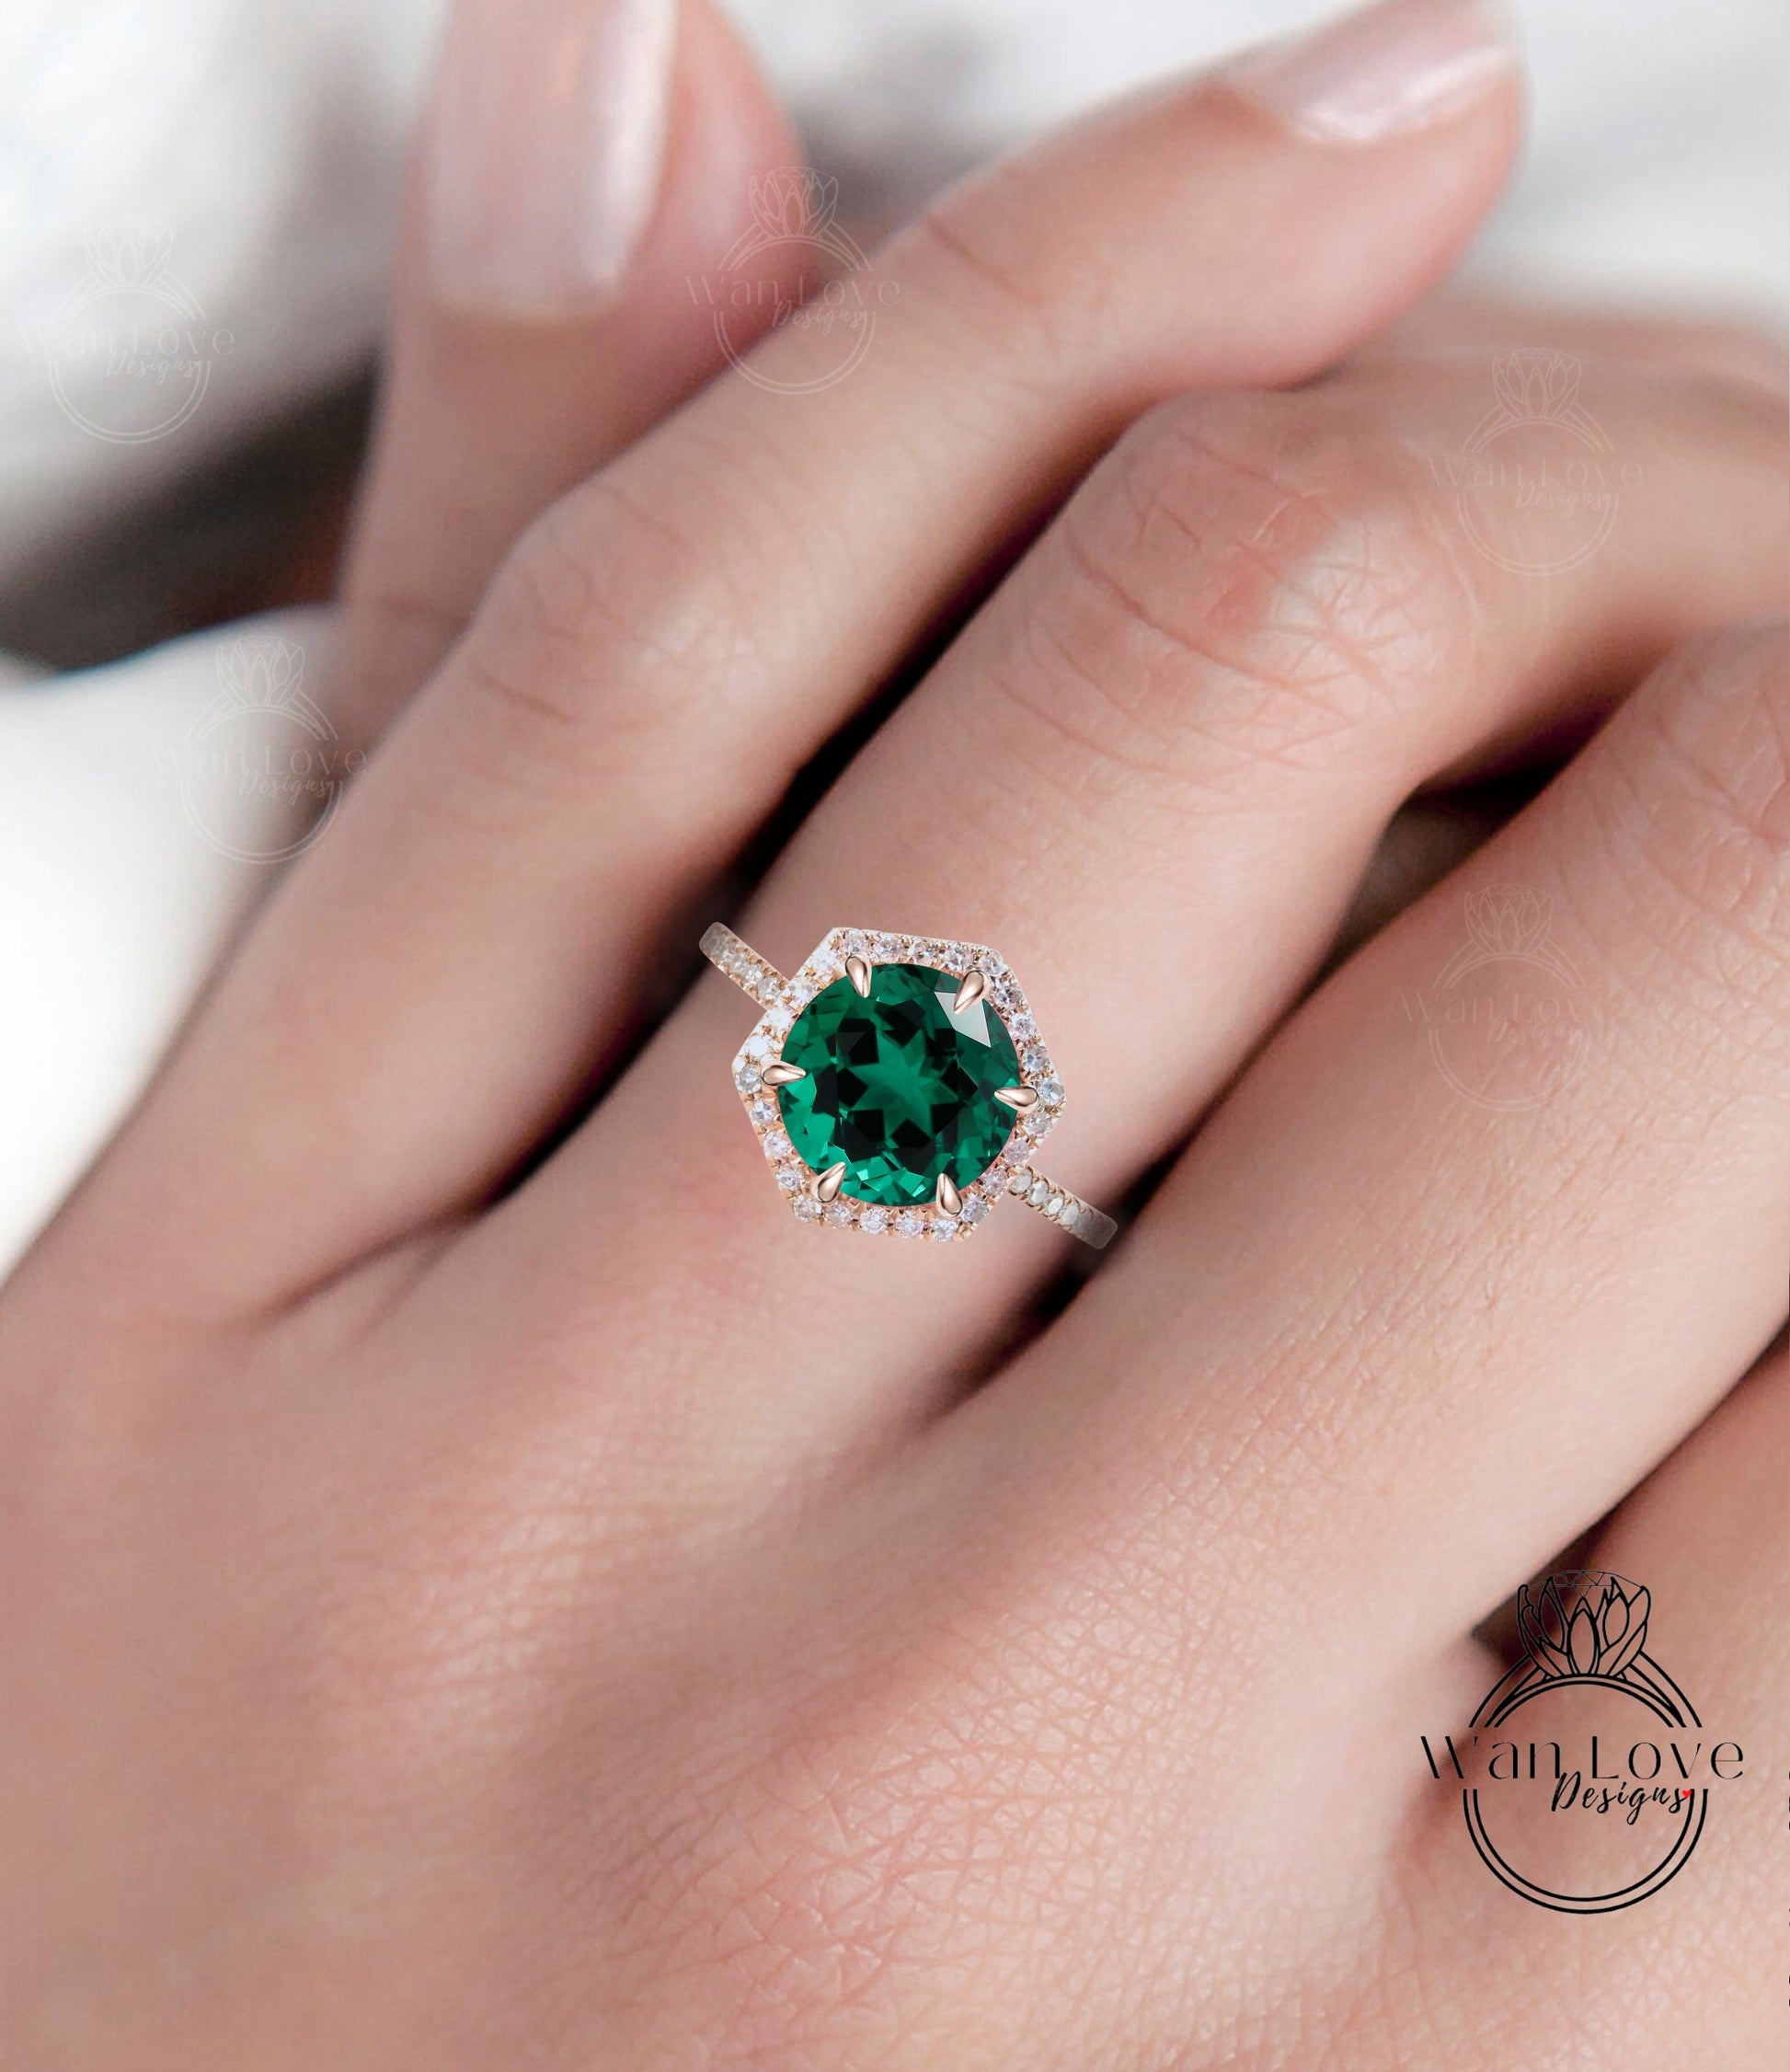 Hexagon Halo Emerald engagement ring Round cut diamond halo ring half eternity vintage art deco rose gold ring anniversary promise ring Wan Love Designs